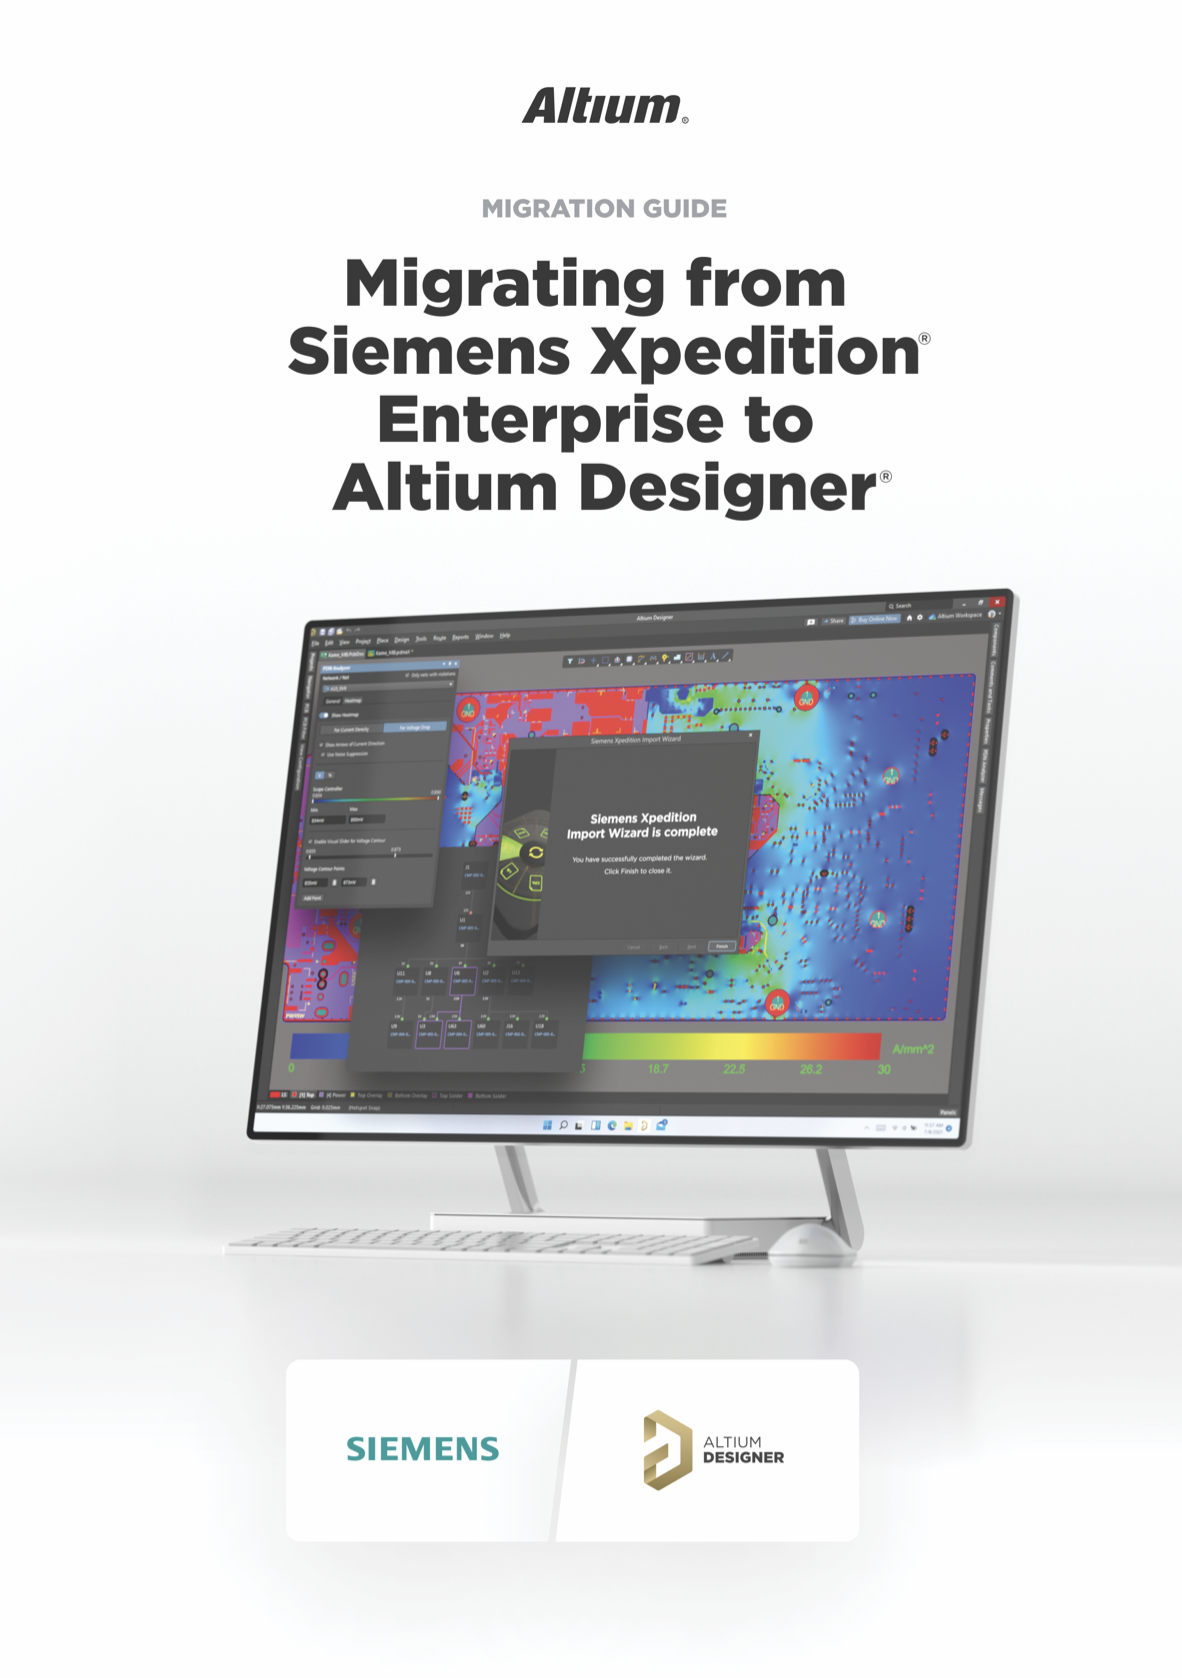 Migrating to Altium Designer from Siemens Xpedition Enterprise